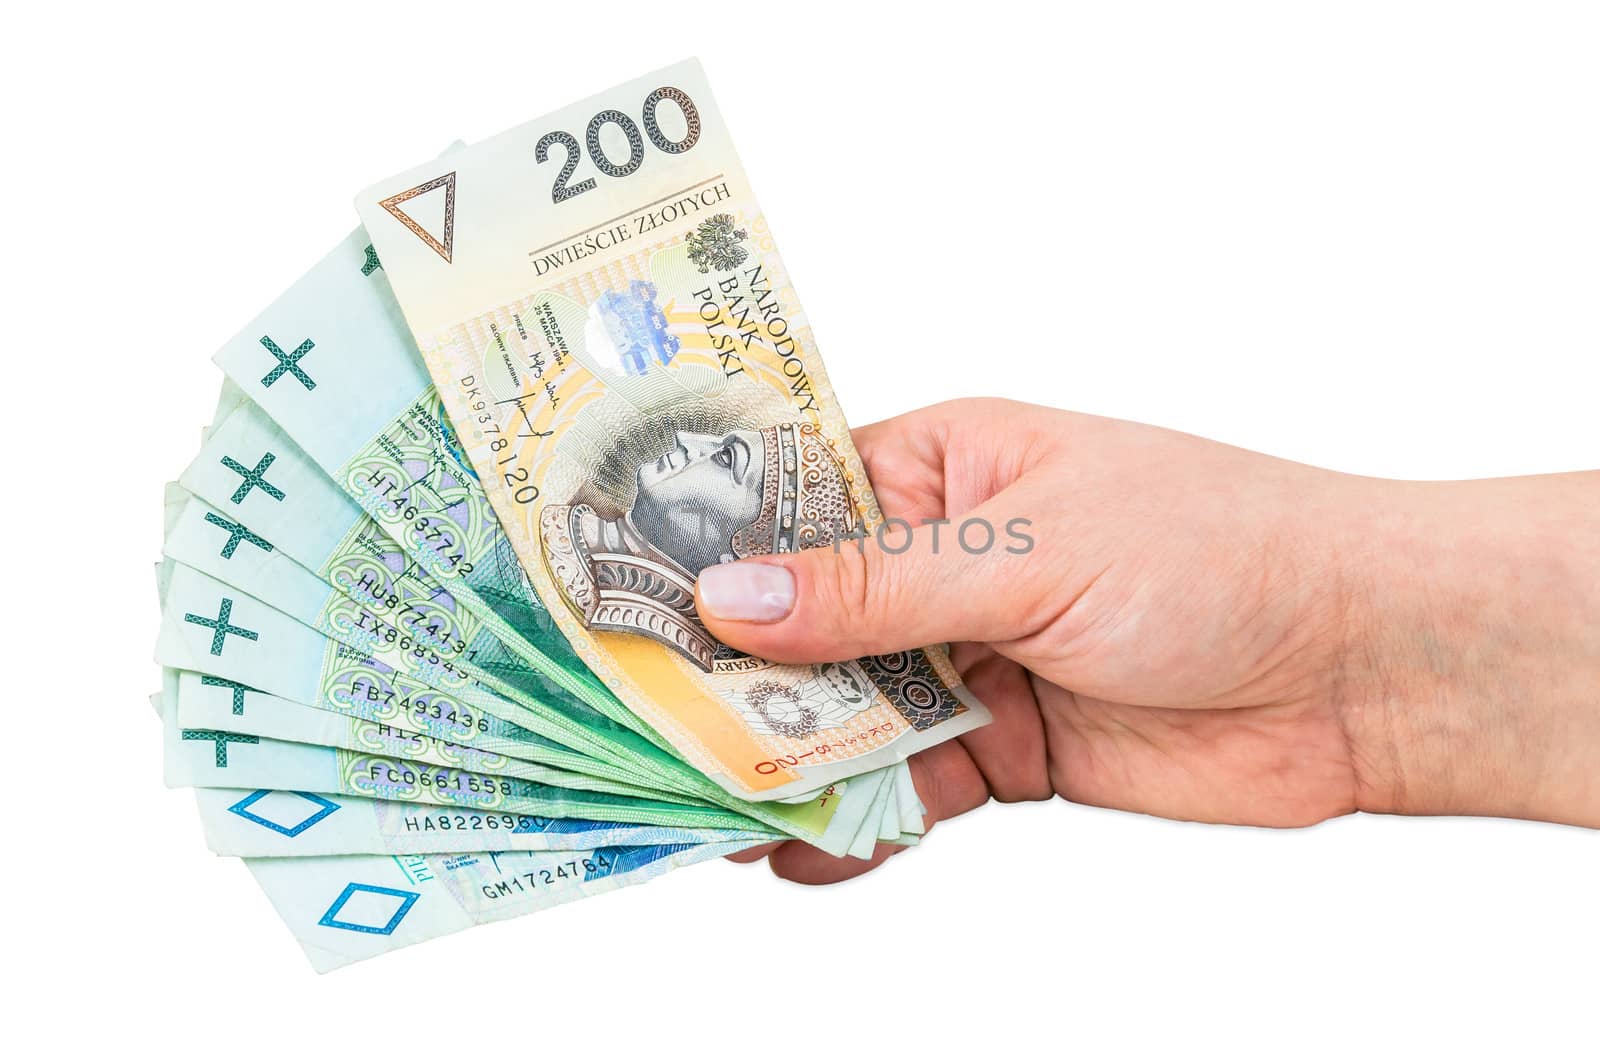 Hand holding polish banknotes by mkos83